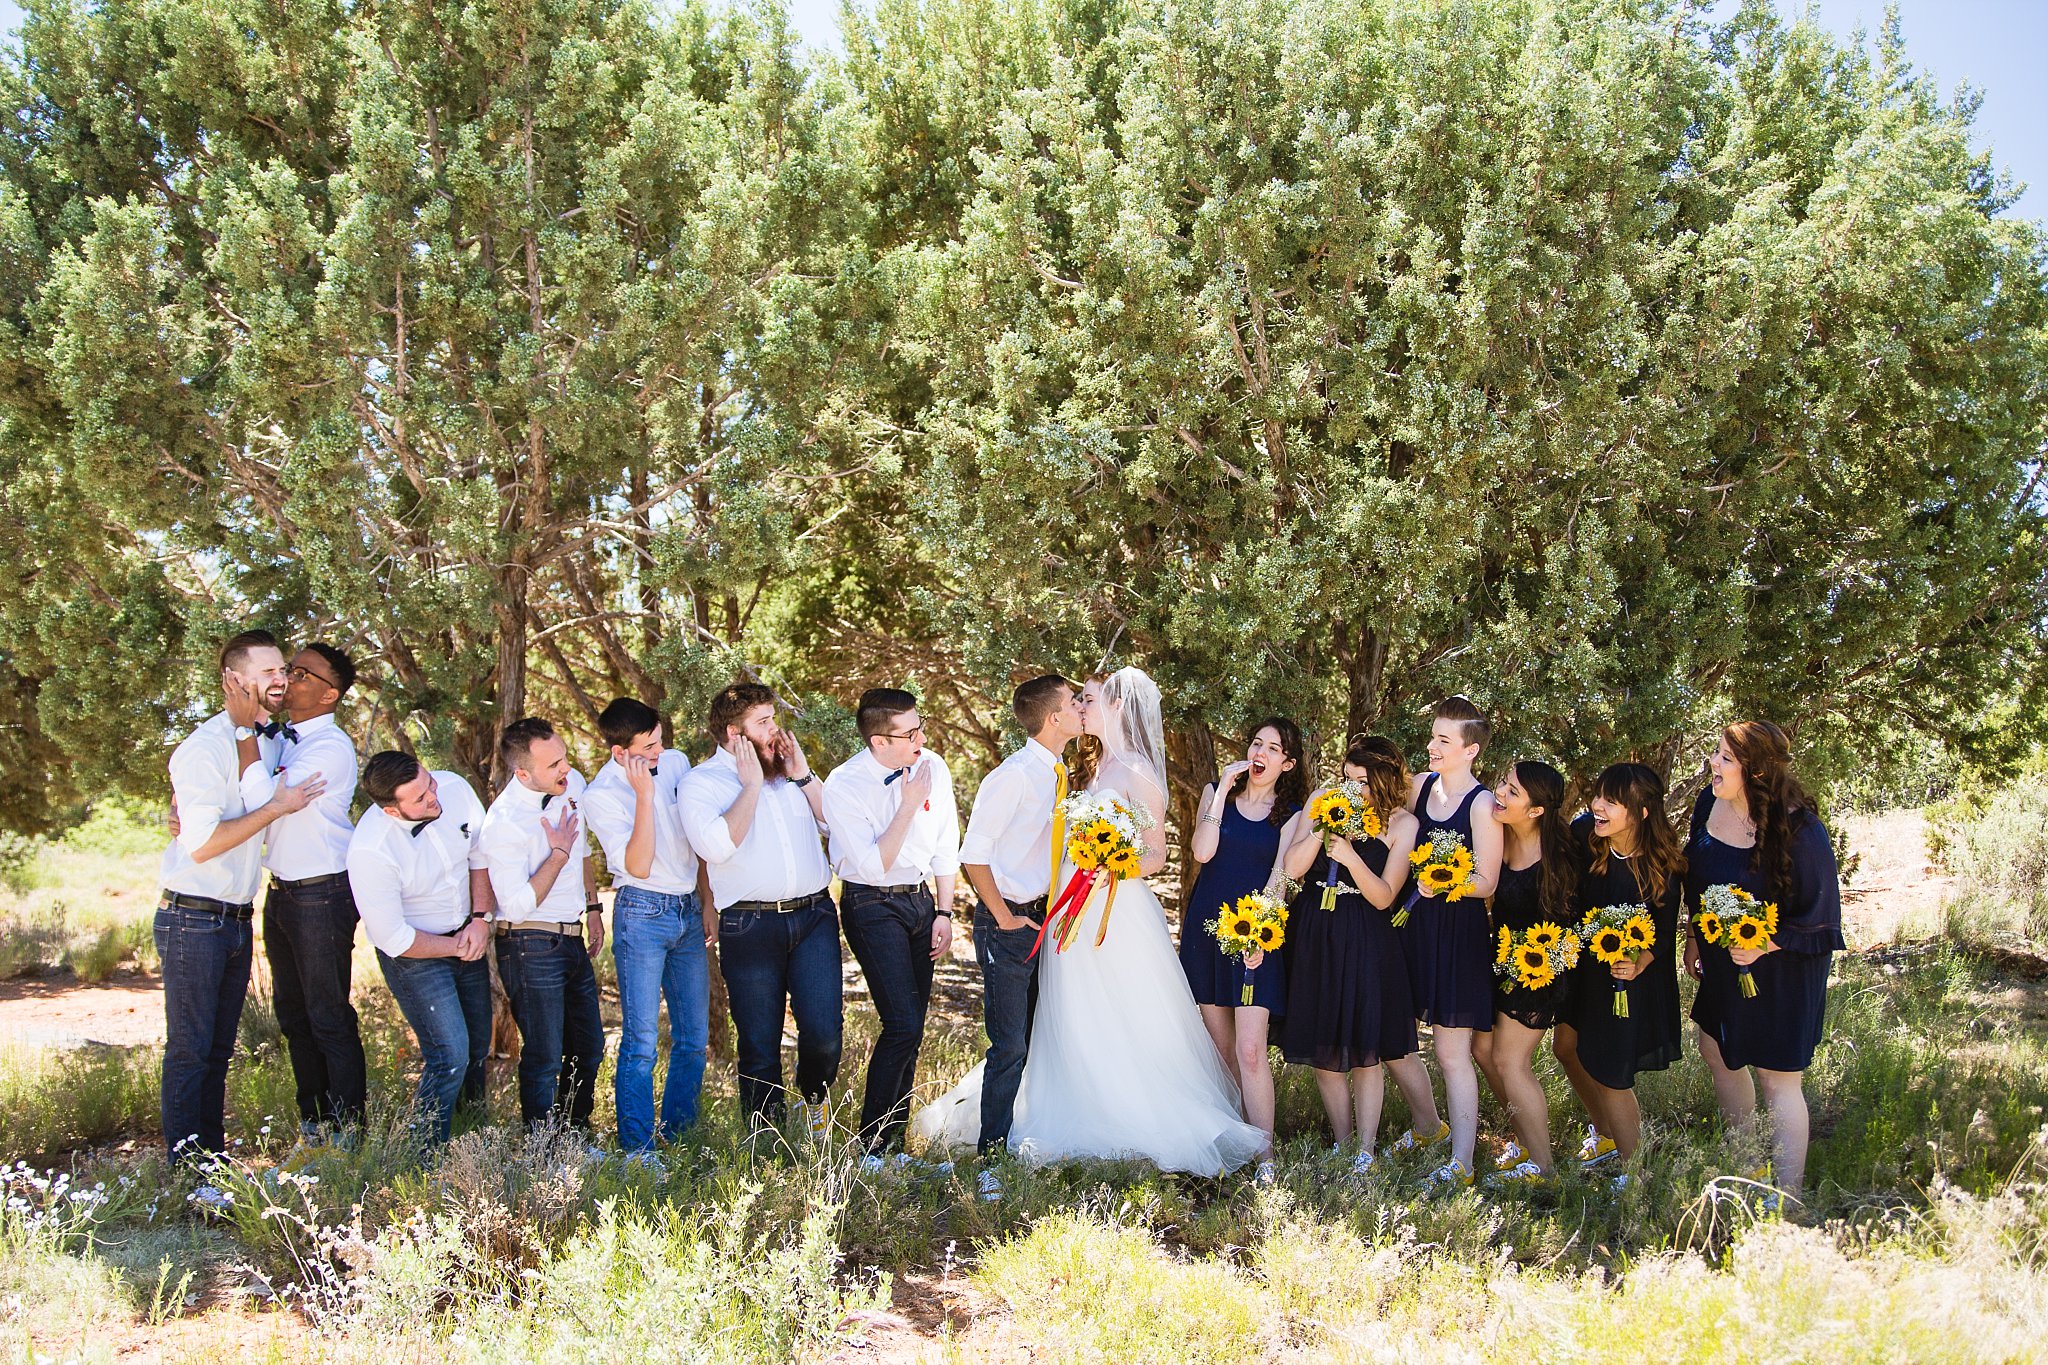 Bridal party having fun together at Sky Ranch Lodge weding by Arizona wedding photographer PMA Photography.